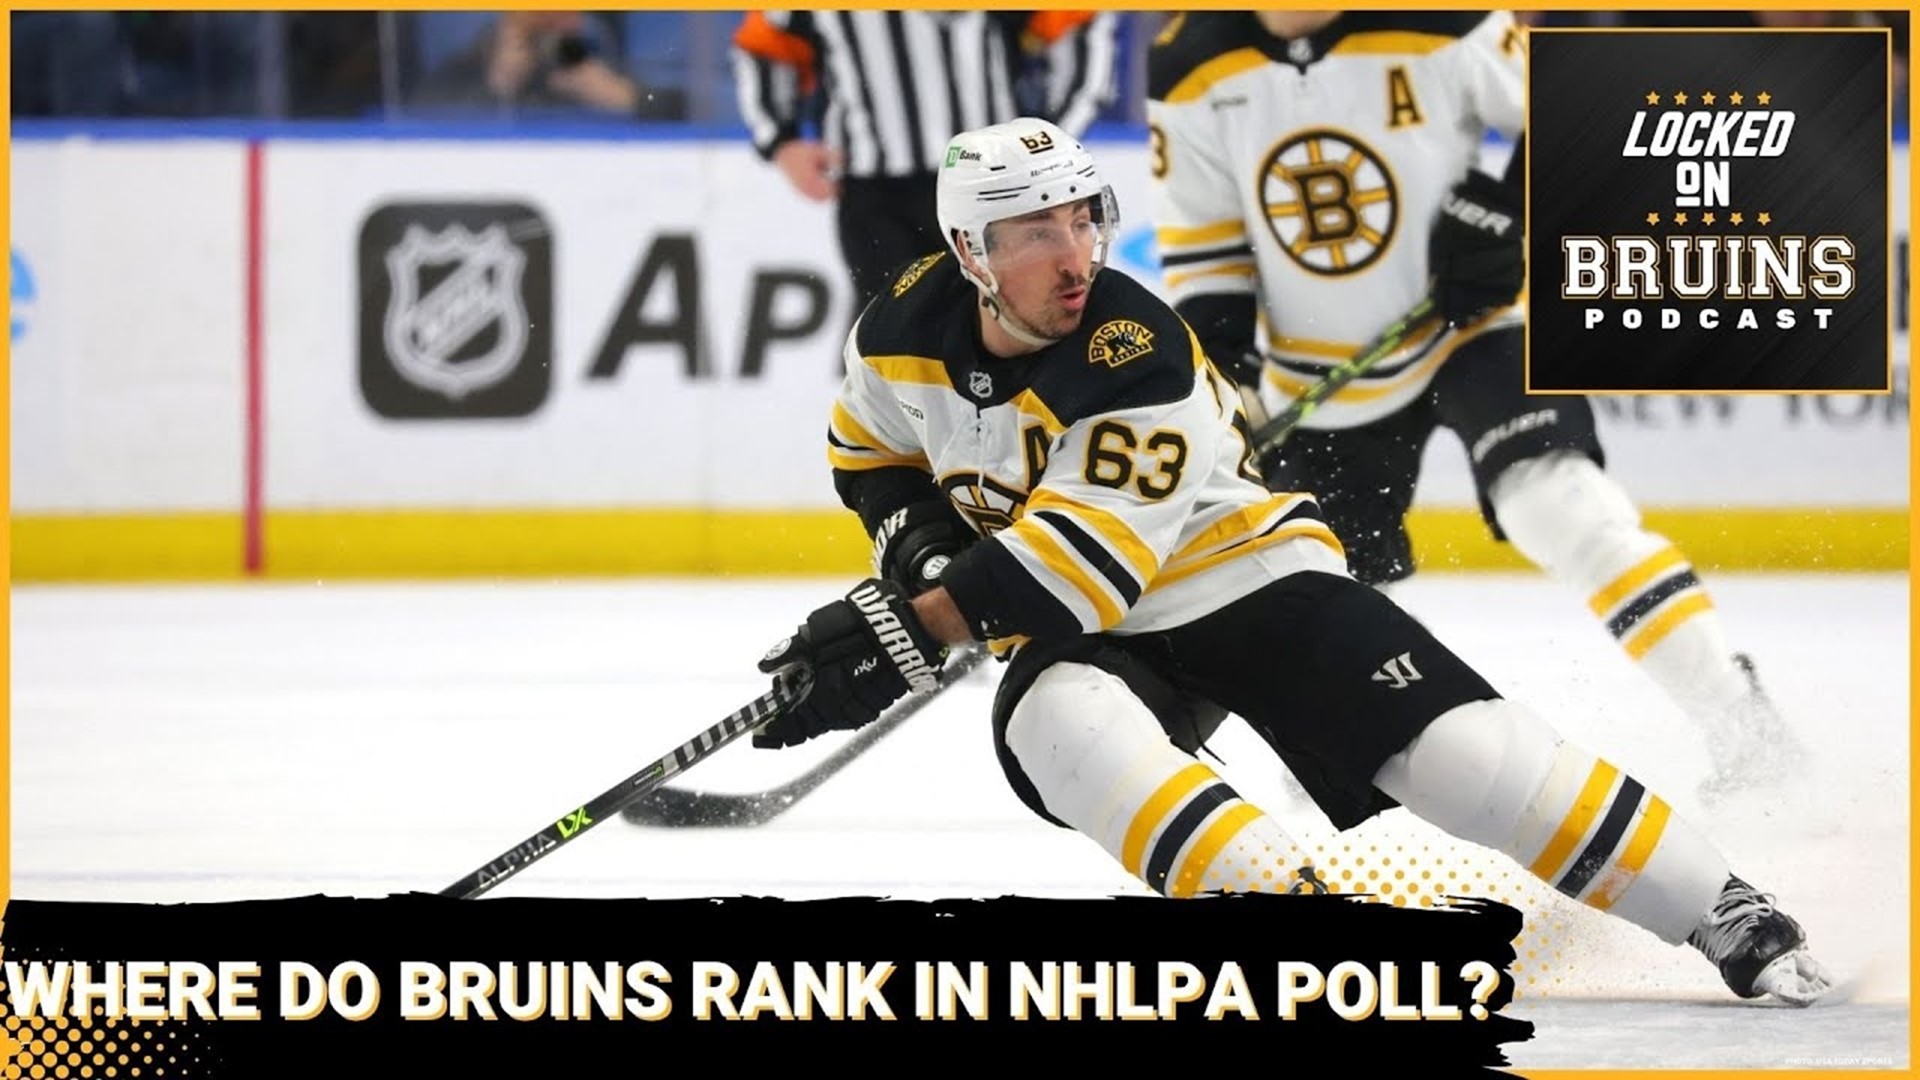 Bertuzzi shines in Boston debut, Bruins beat Rangers 4-2 - The San